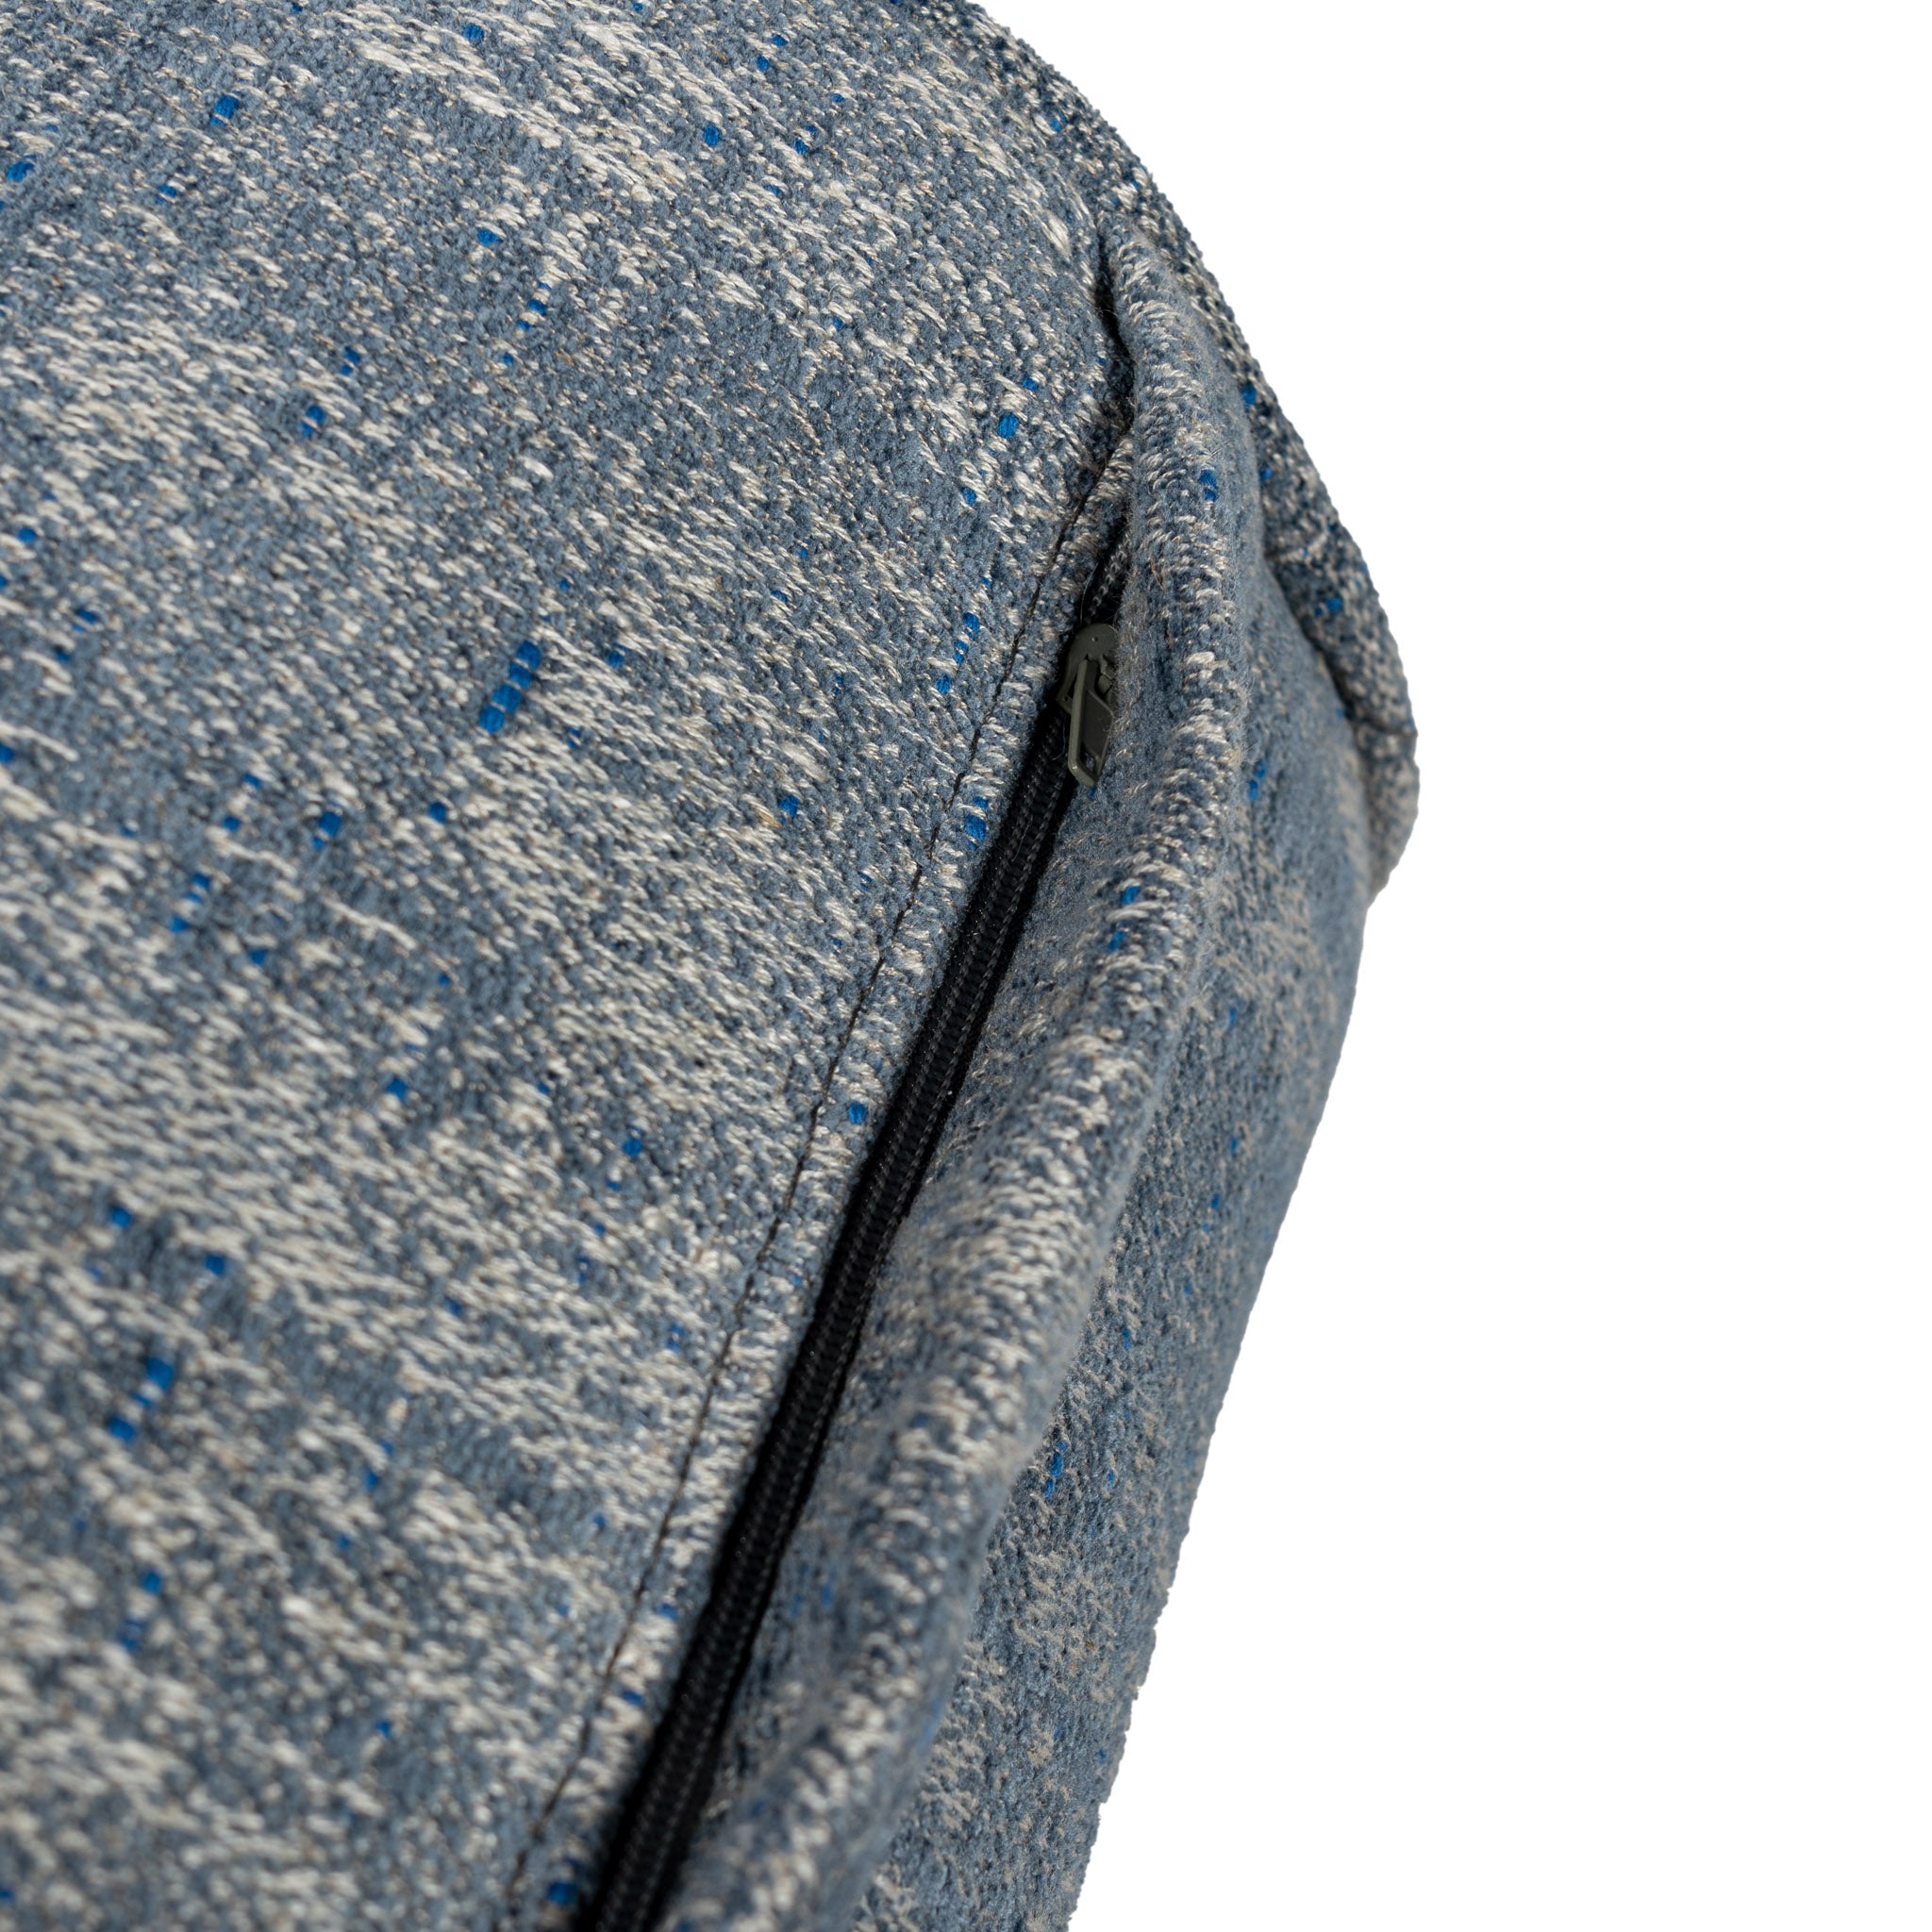 Fabric roll cushion with blue inserts ART B77